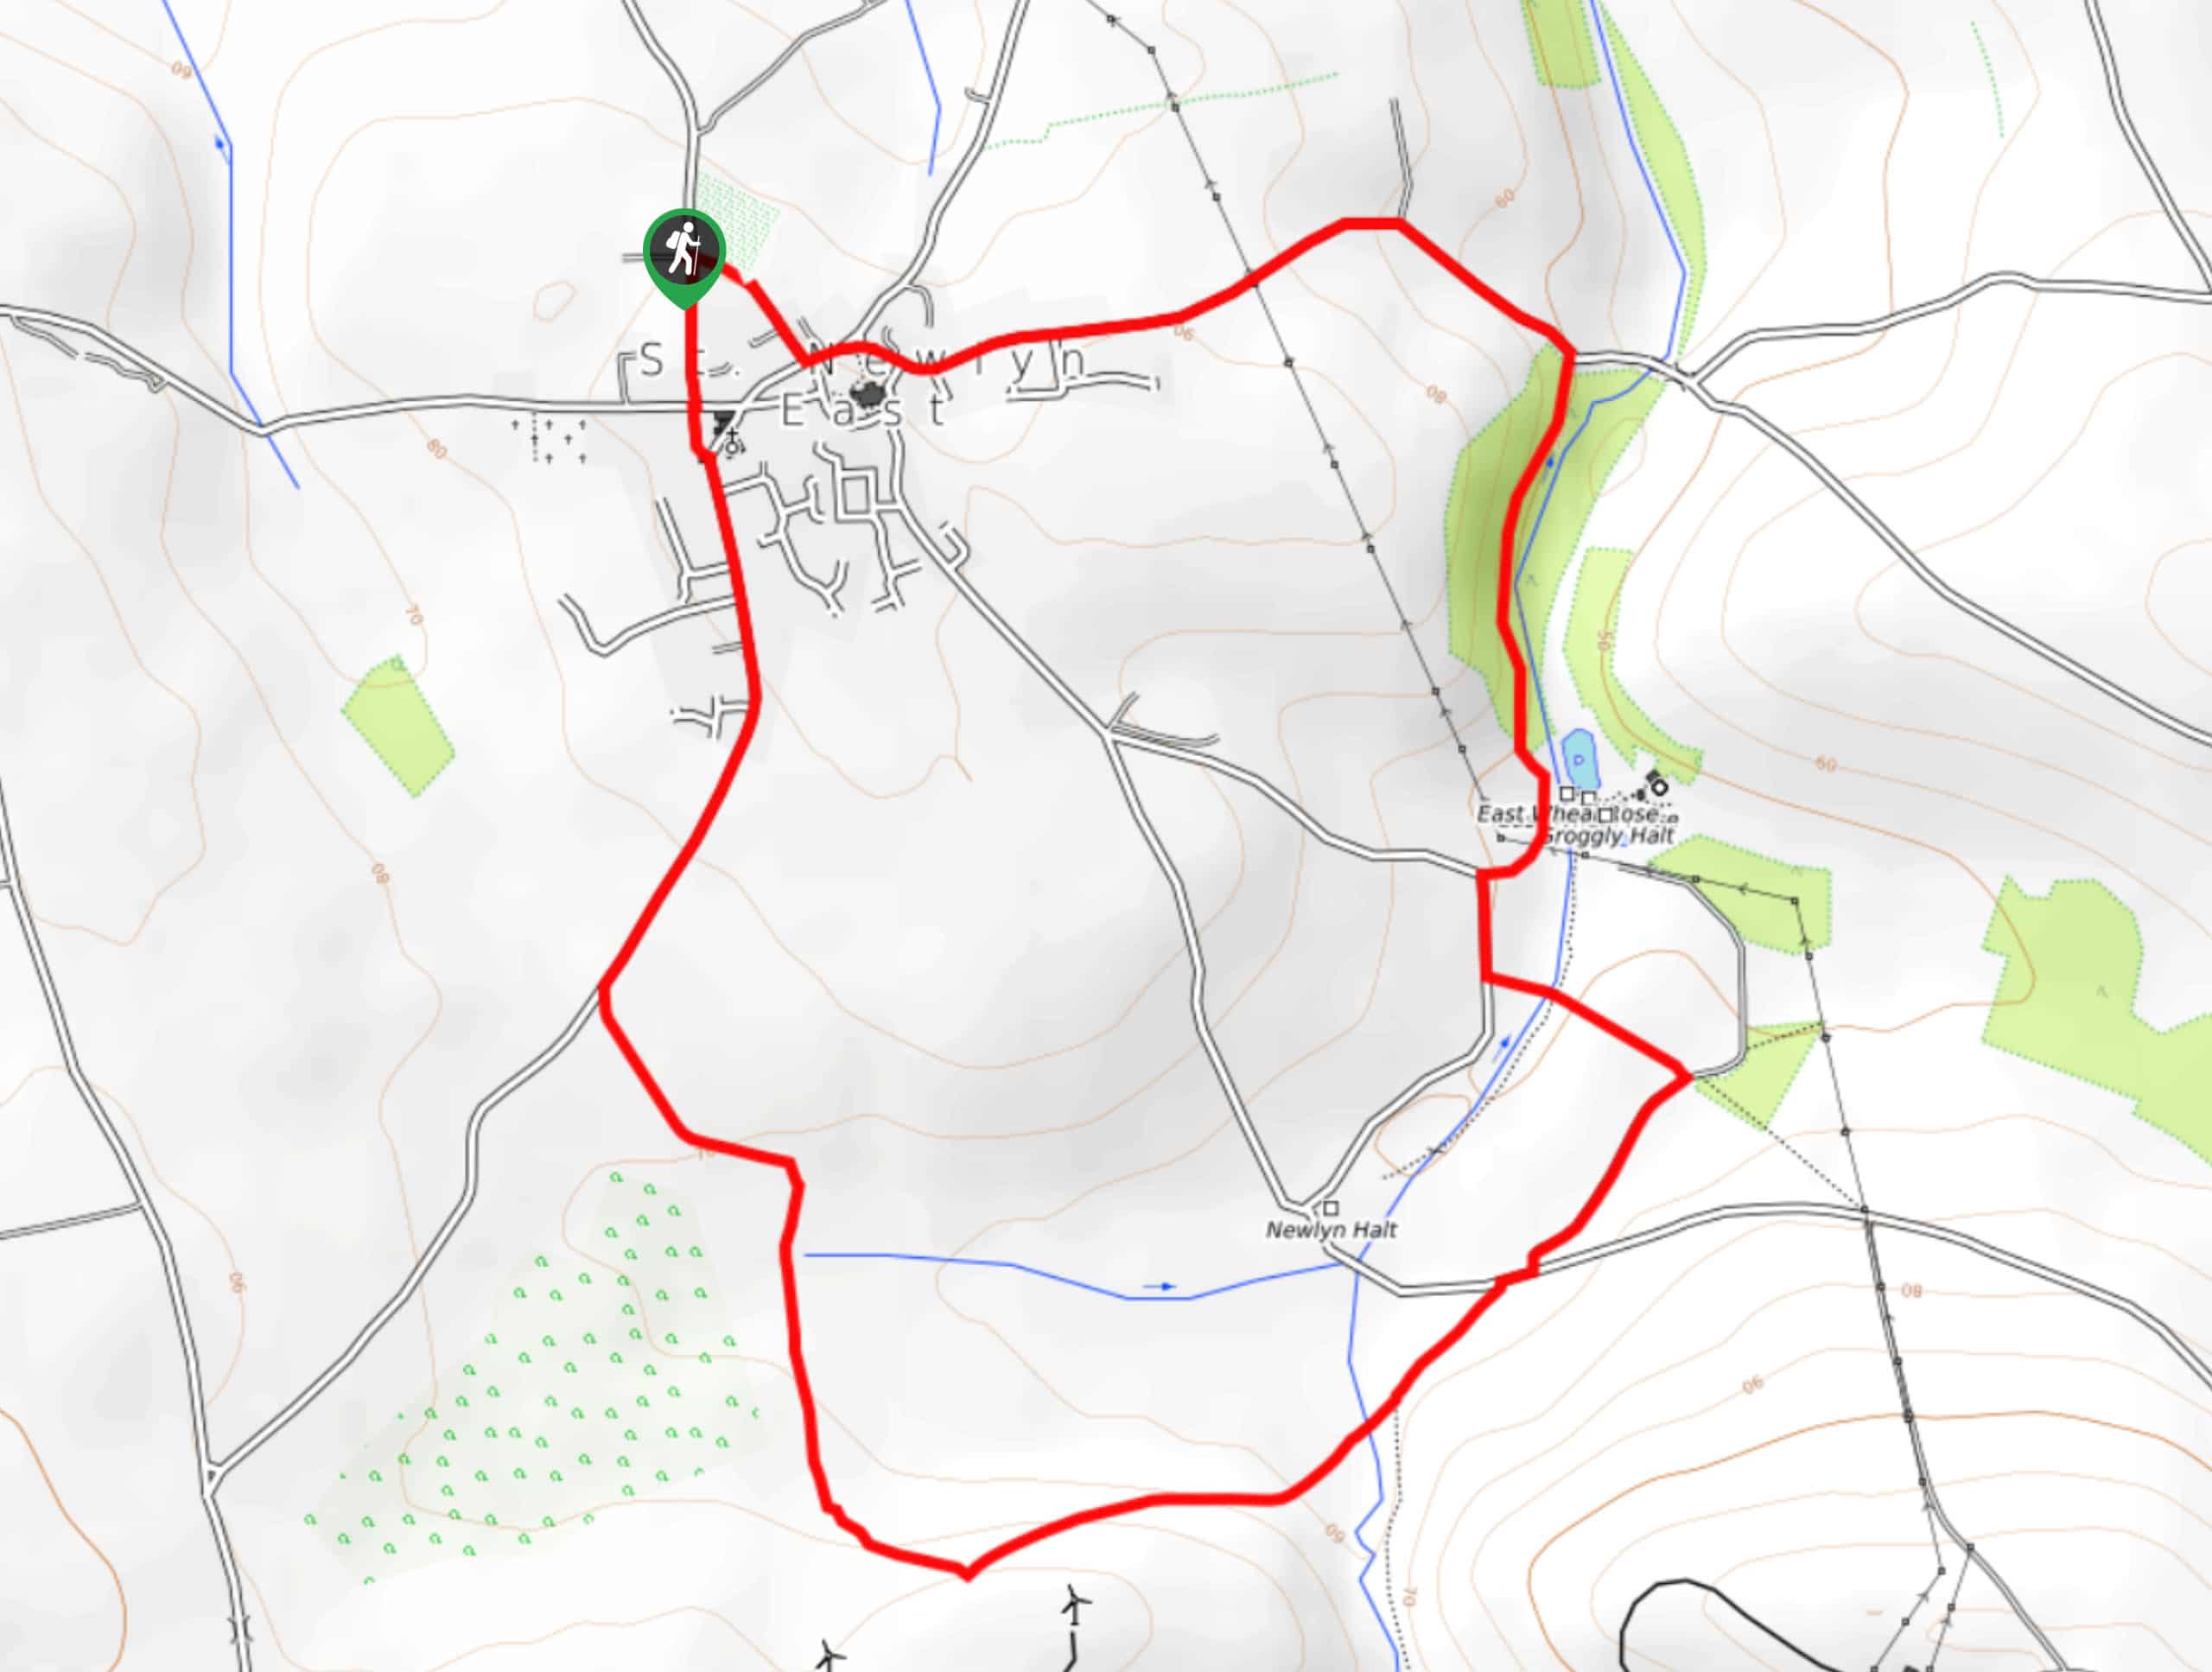 St Newlyn East and Lappa Valley Circular Walk Map